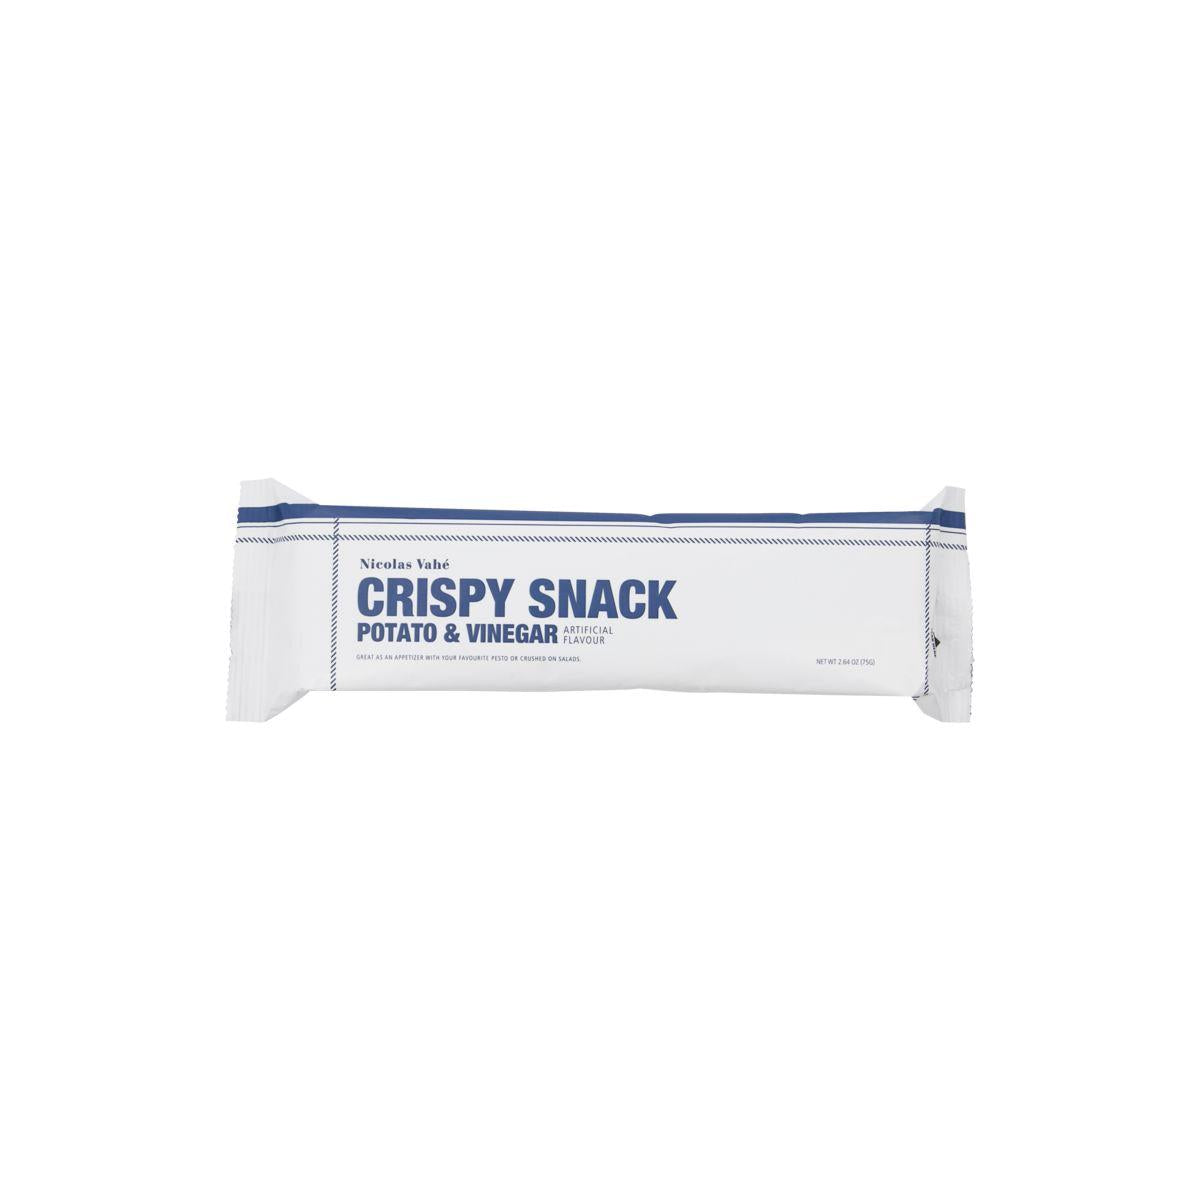 Crispy Snack | Potato + Vinegar - Nicolas Vahé - Bluecashew Kitchen Homestead